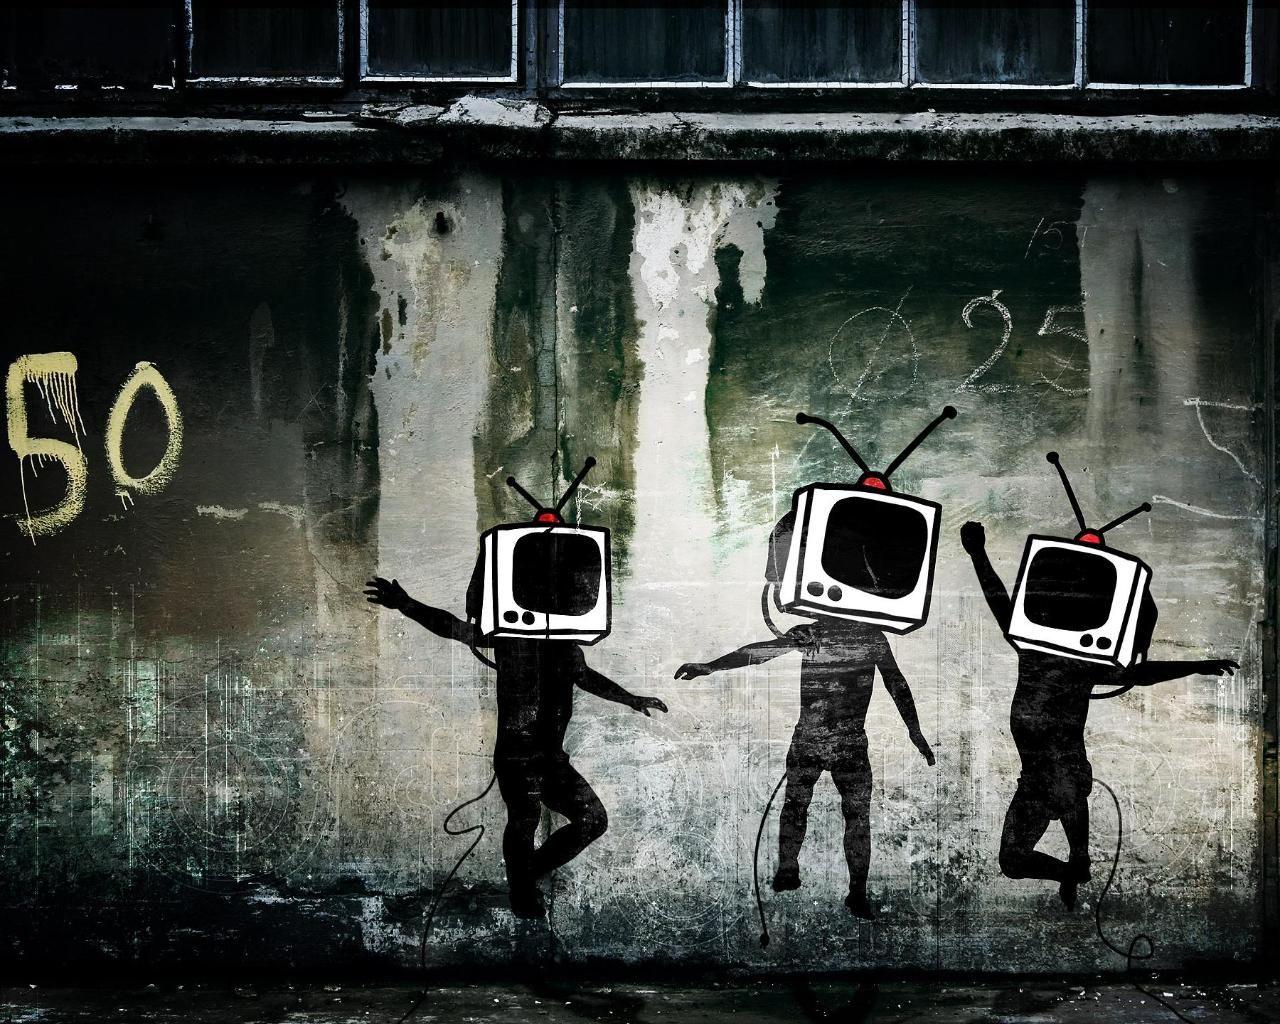 TV man urban graffiti wallpaper. Urban Graffiti References